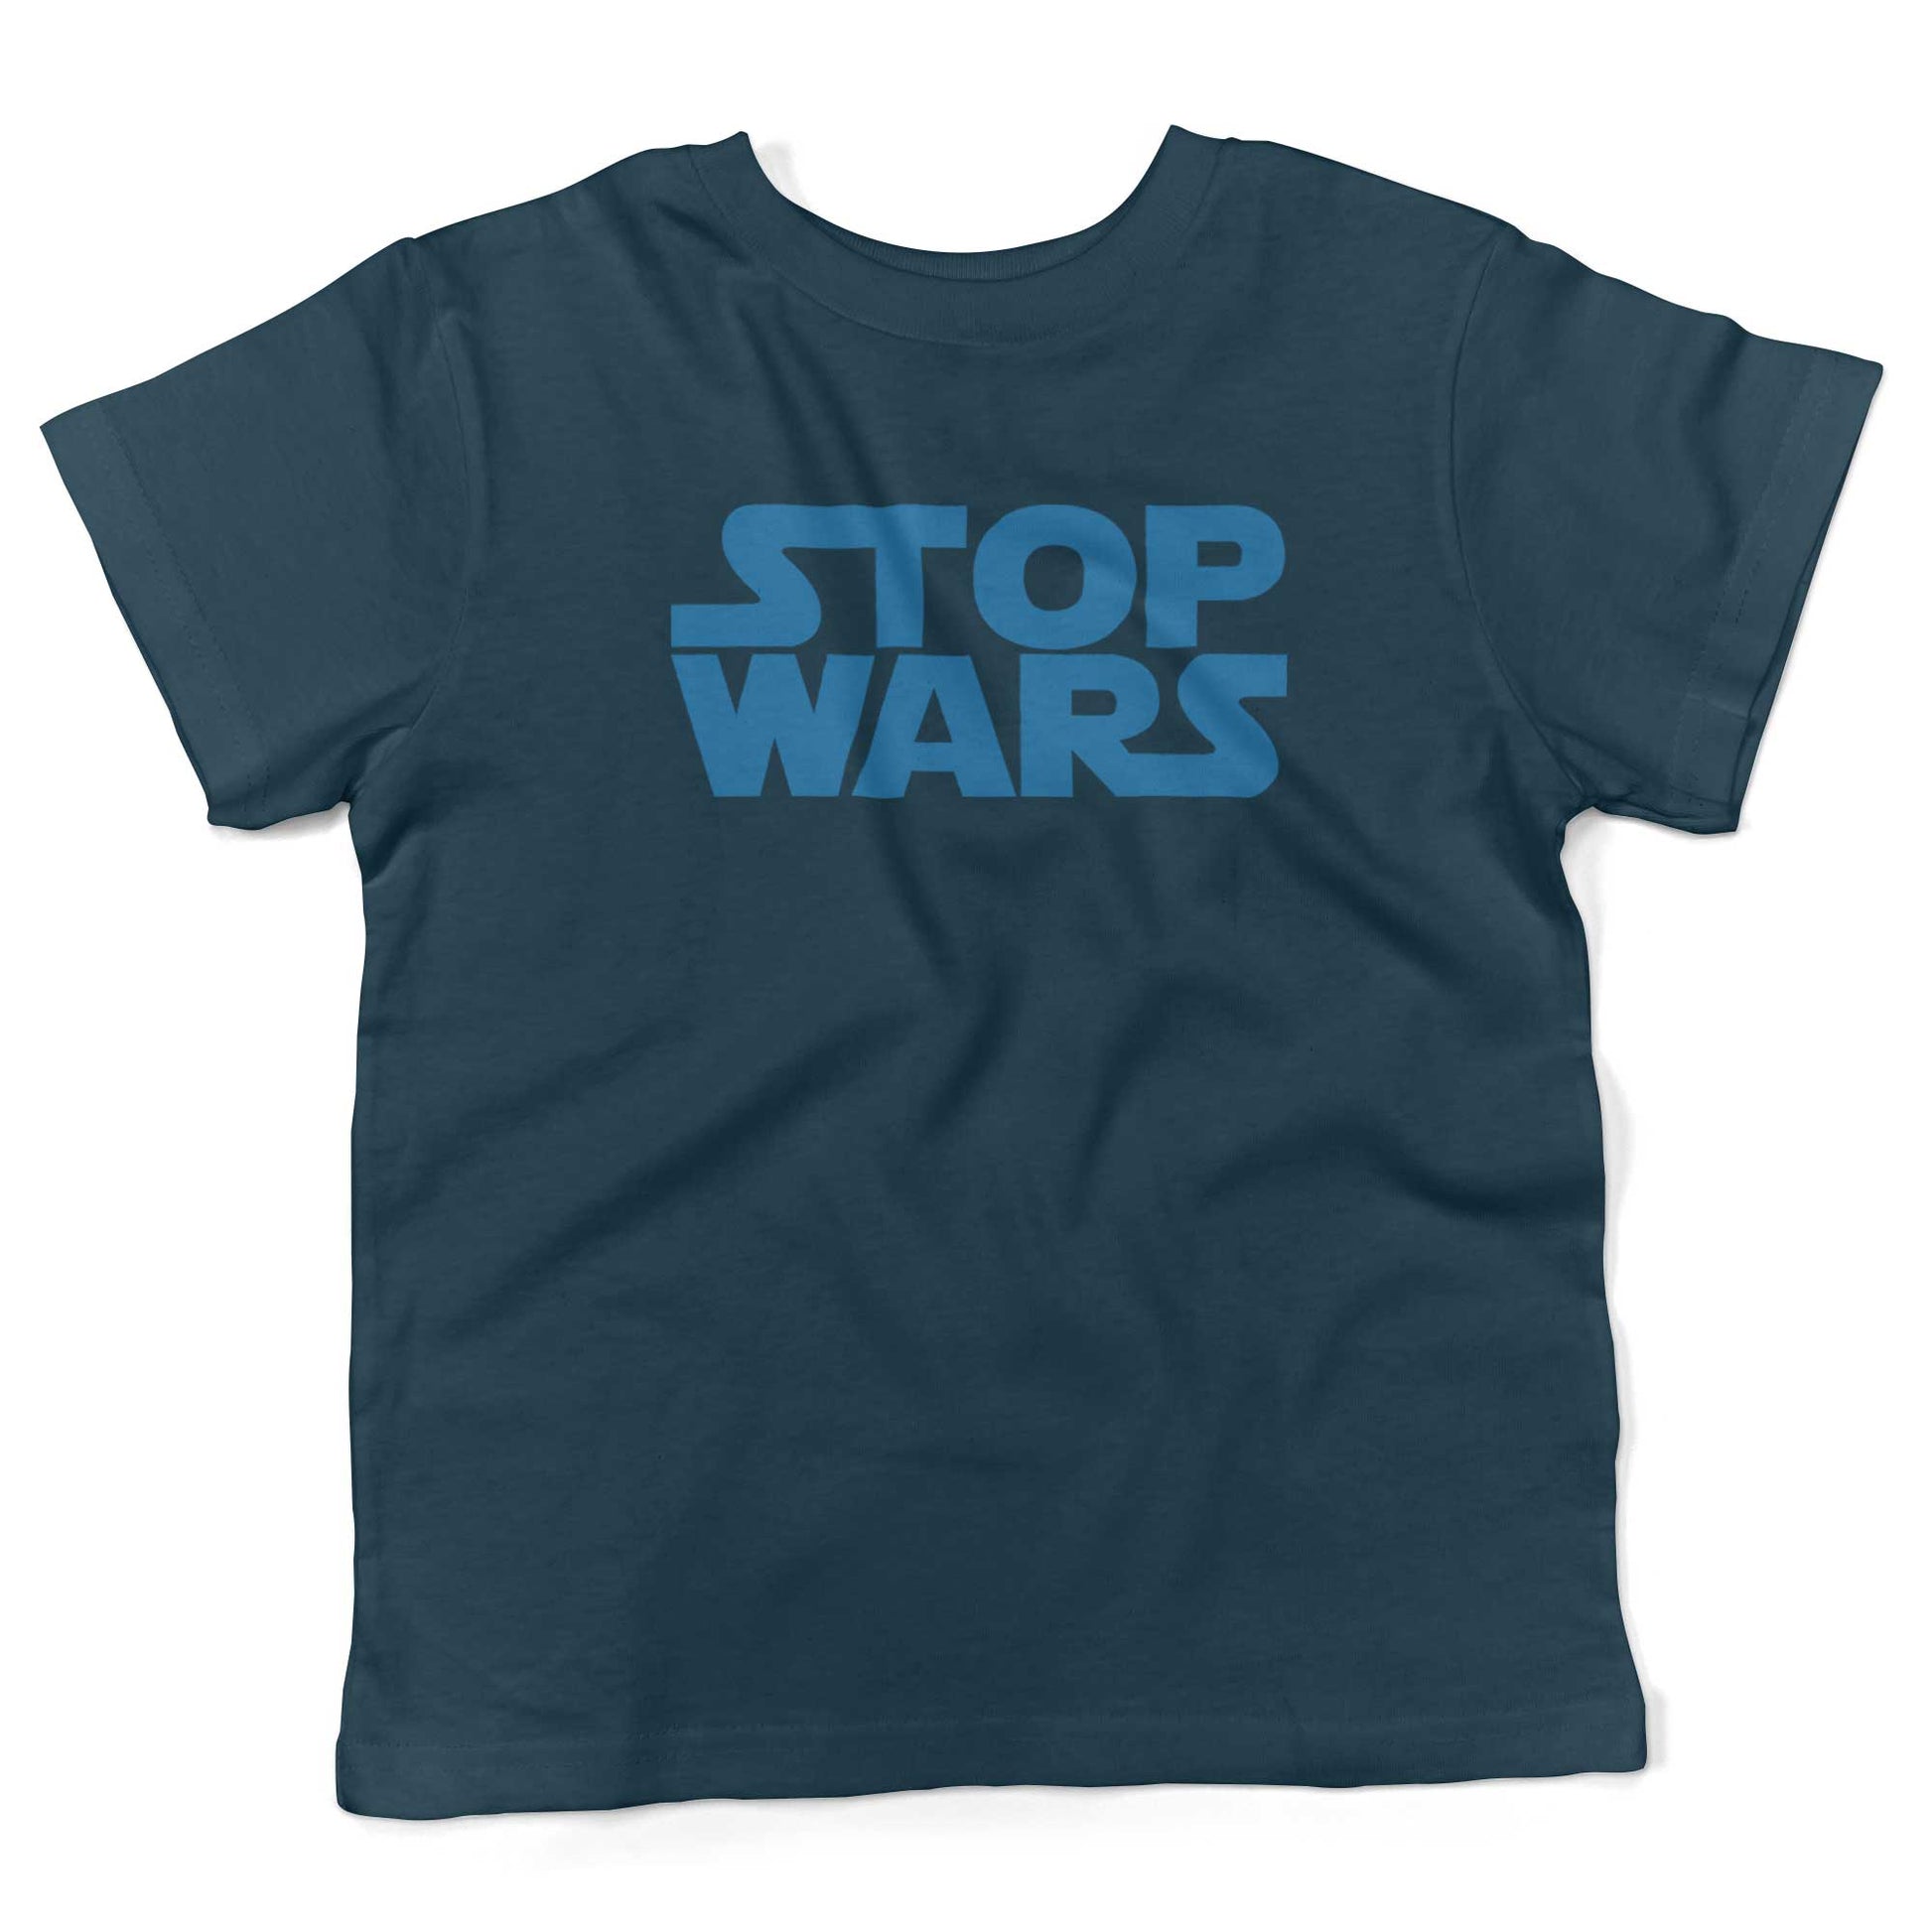 STOP WARS Toddler Shirt-Organic Pacific Blue-2T